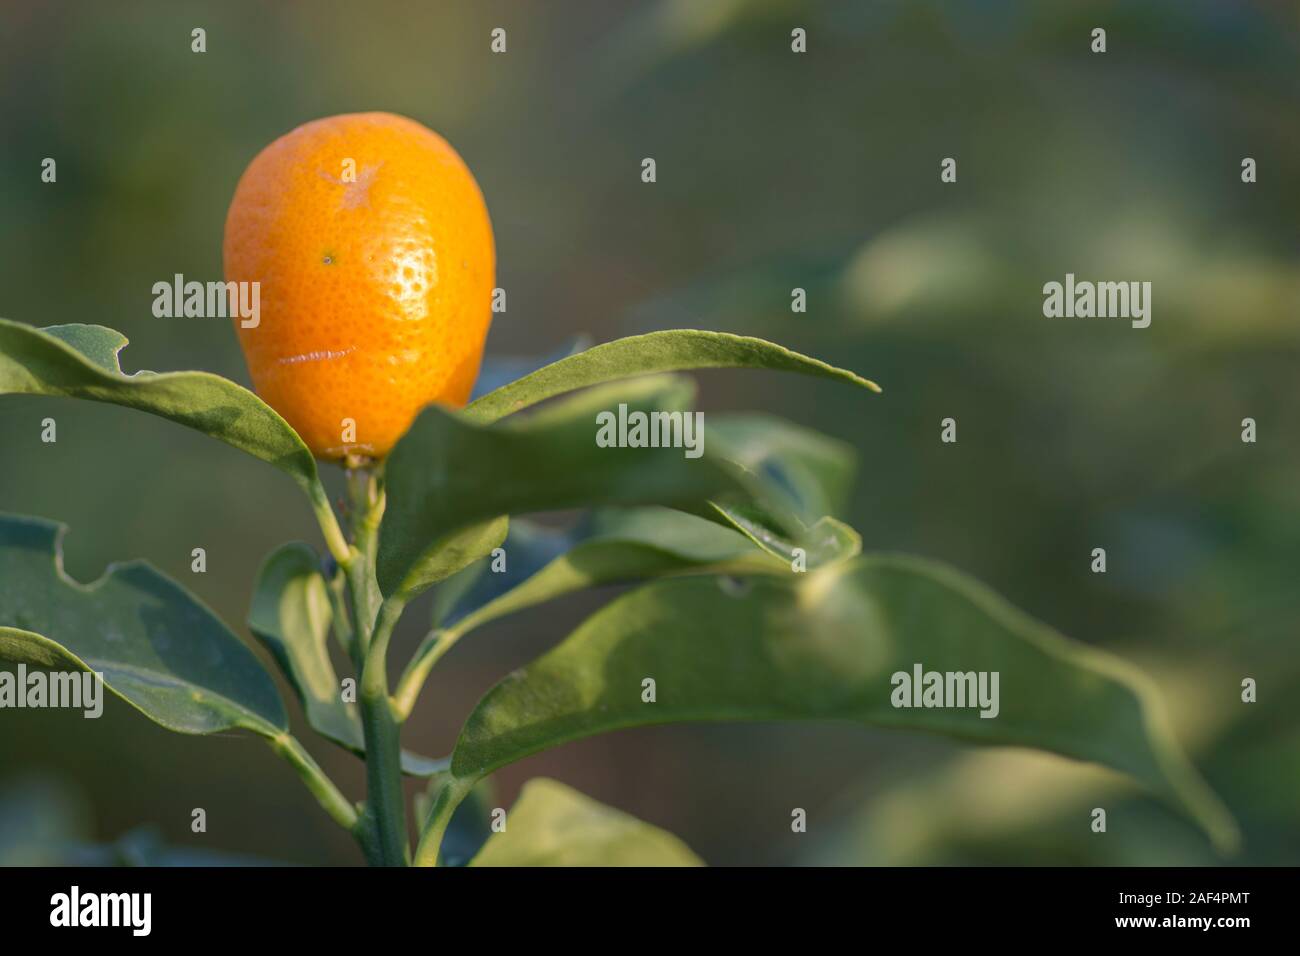 Single Kumquat (Citrus japonica) fruit, ripe and ready for harvest Stock Photo